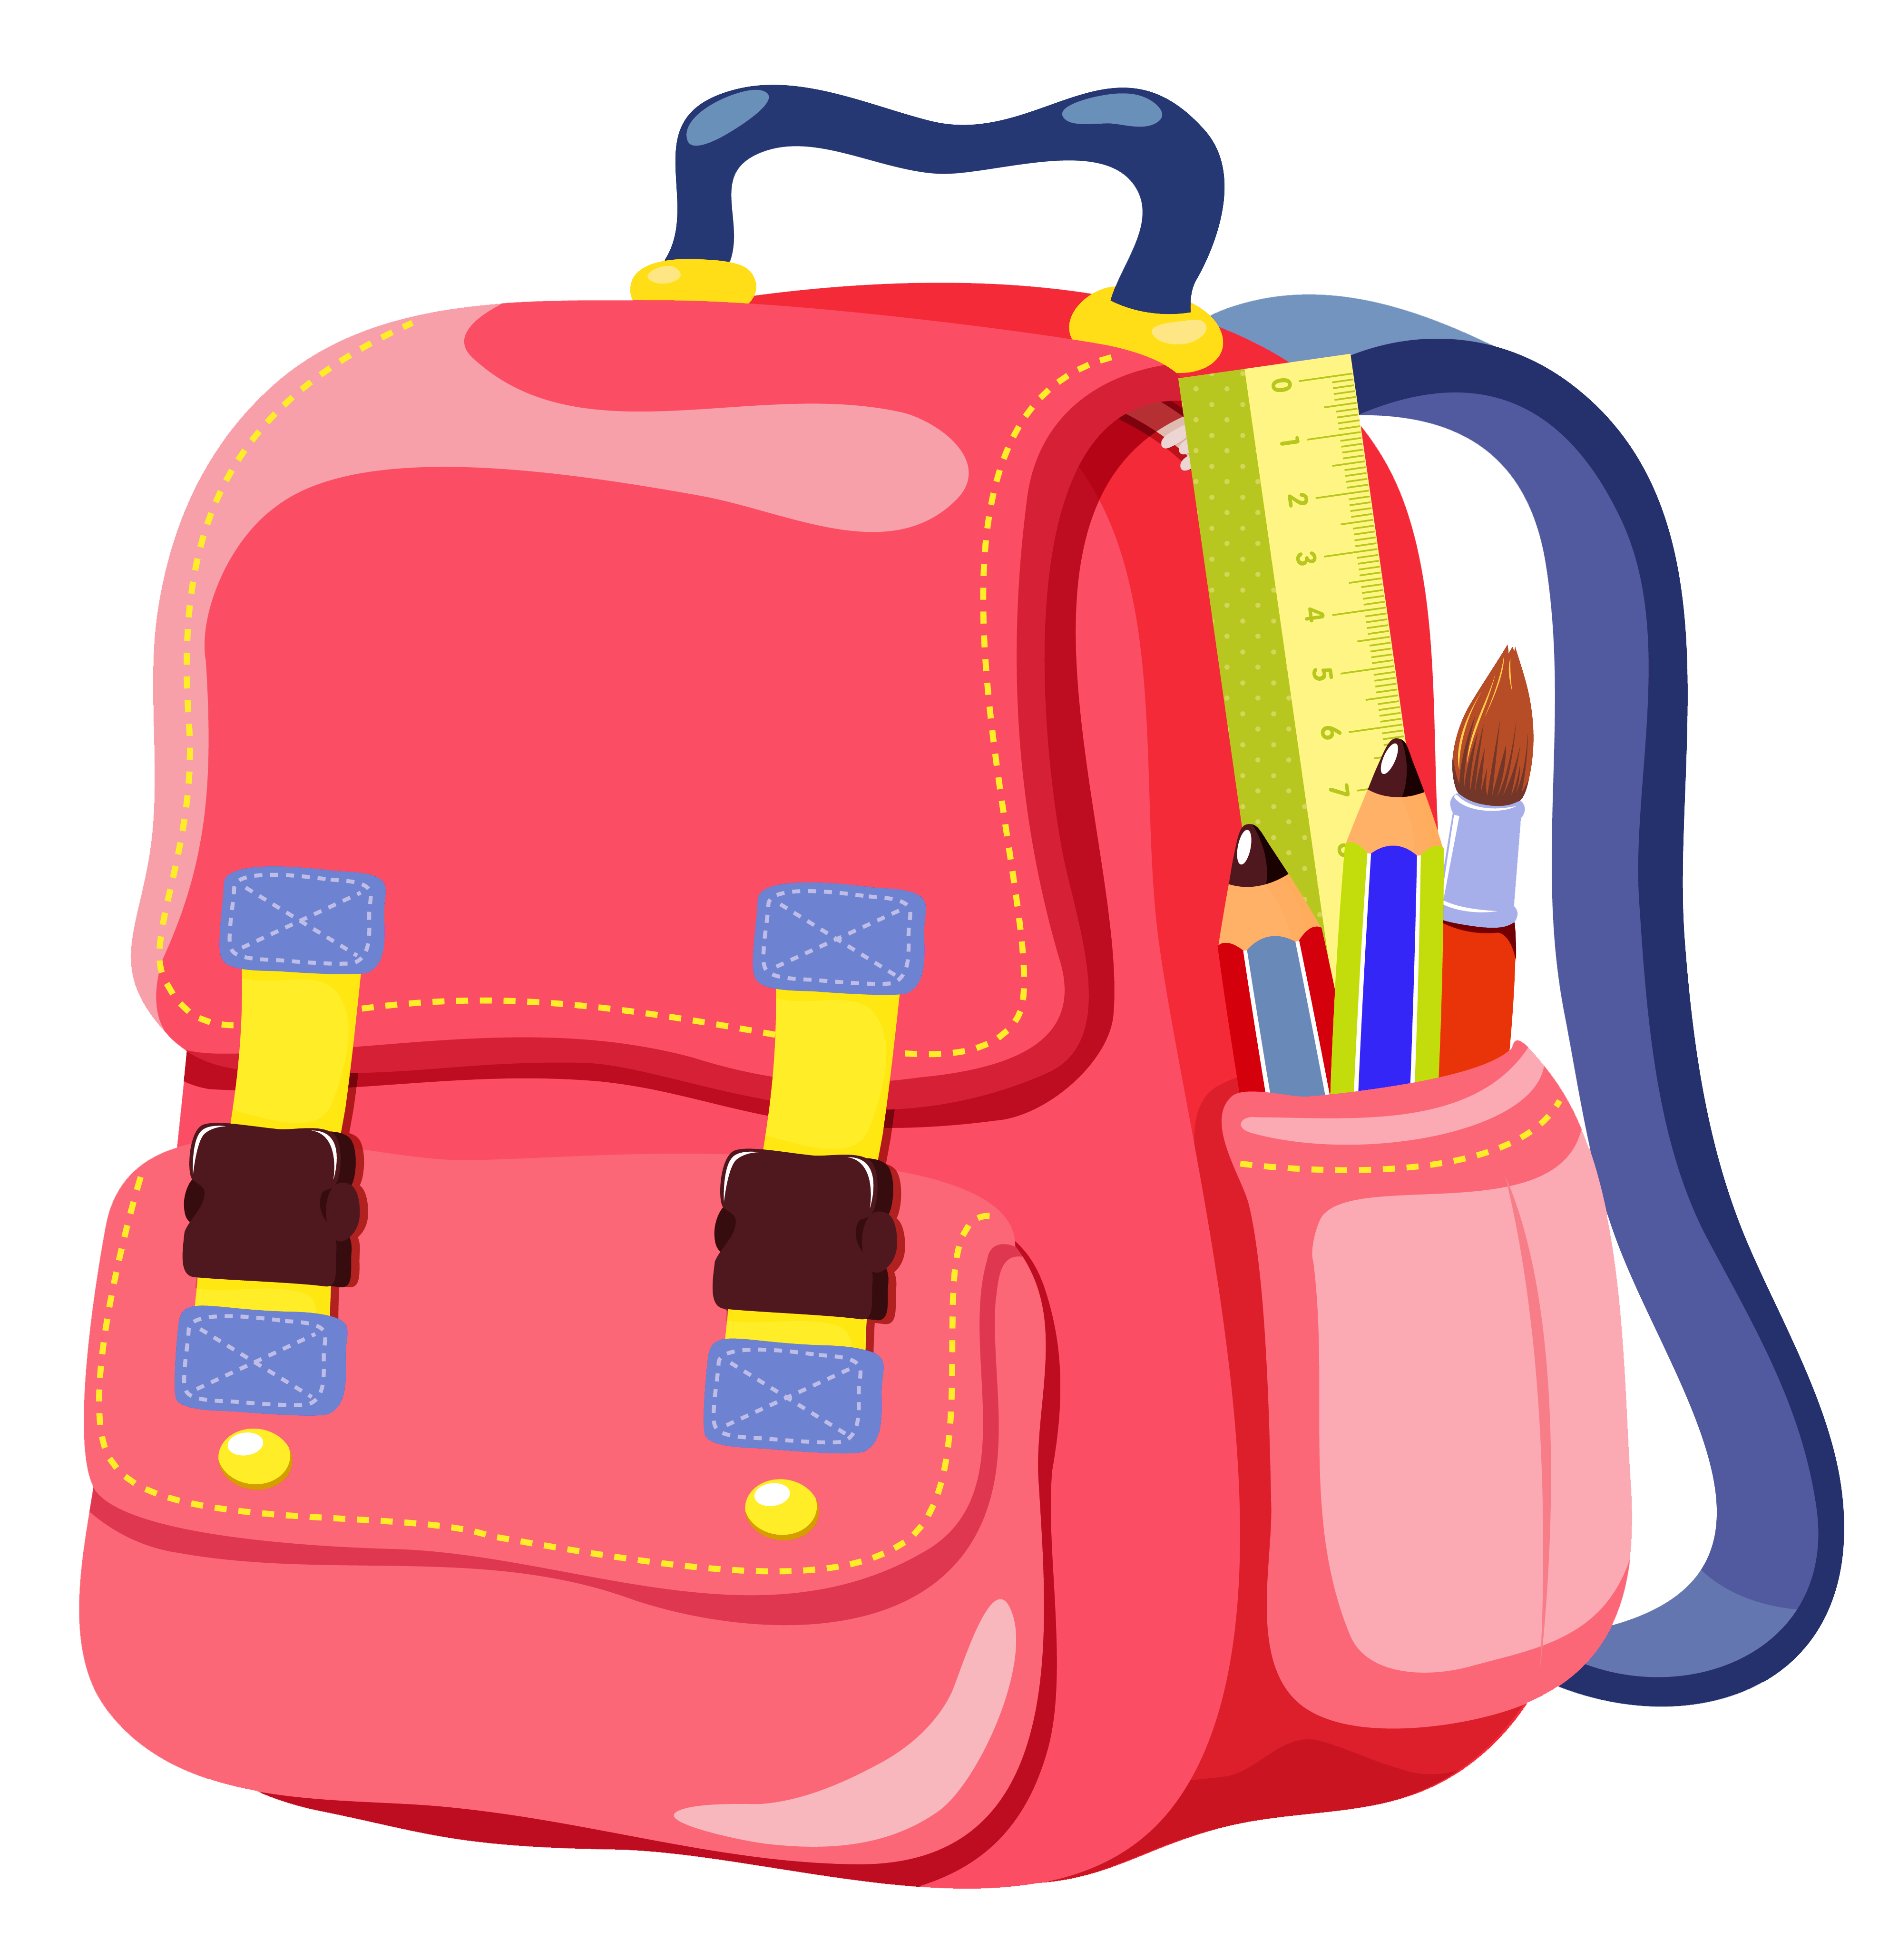 Backpack PNG Clip Art - Best WEB Clipart